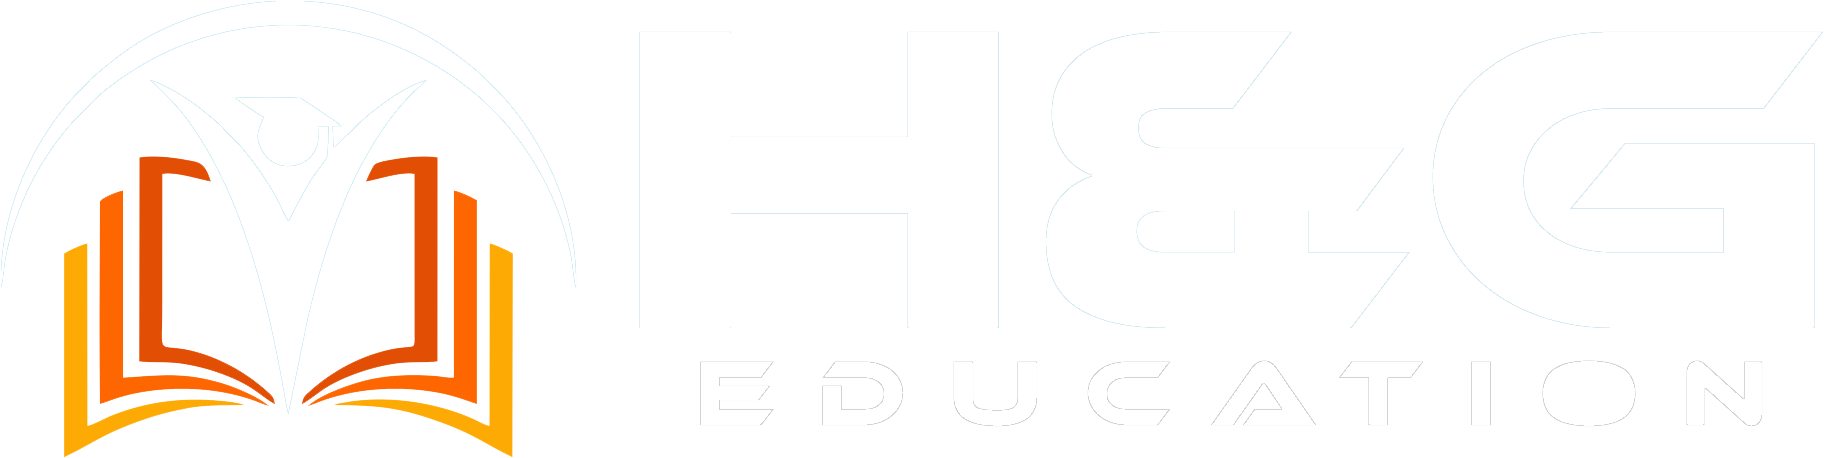 H&G Education